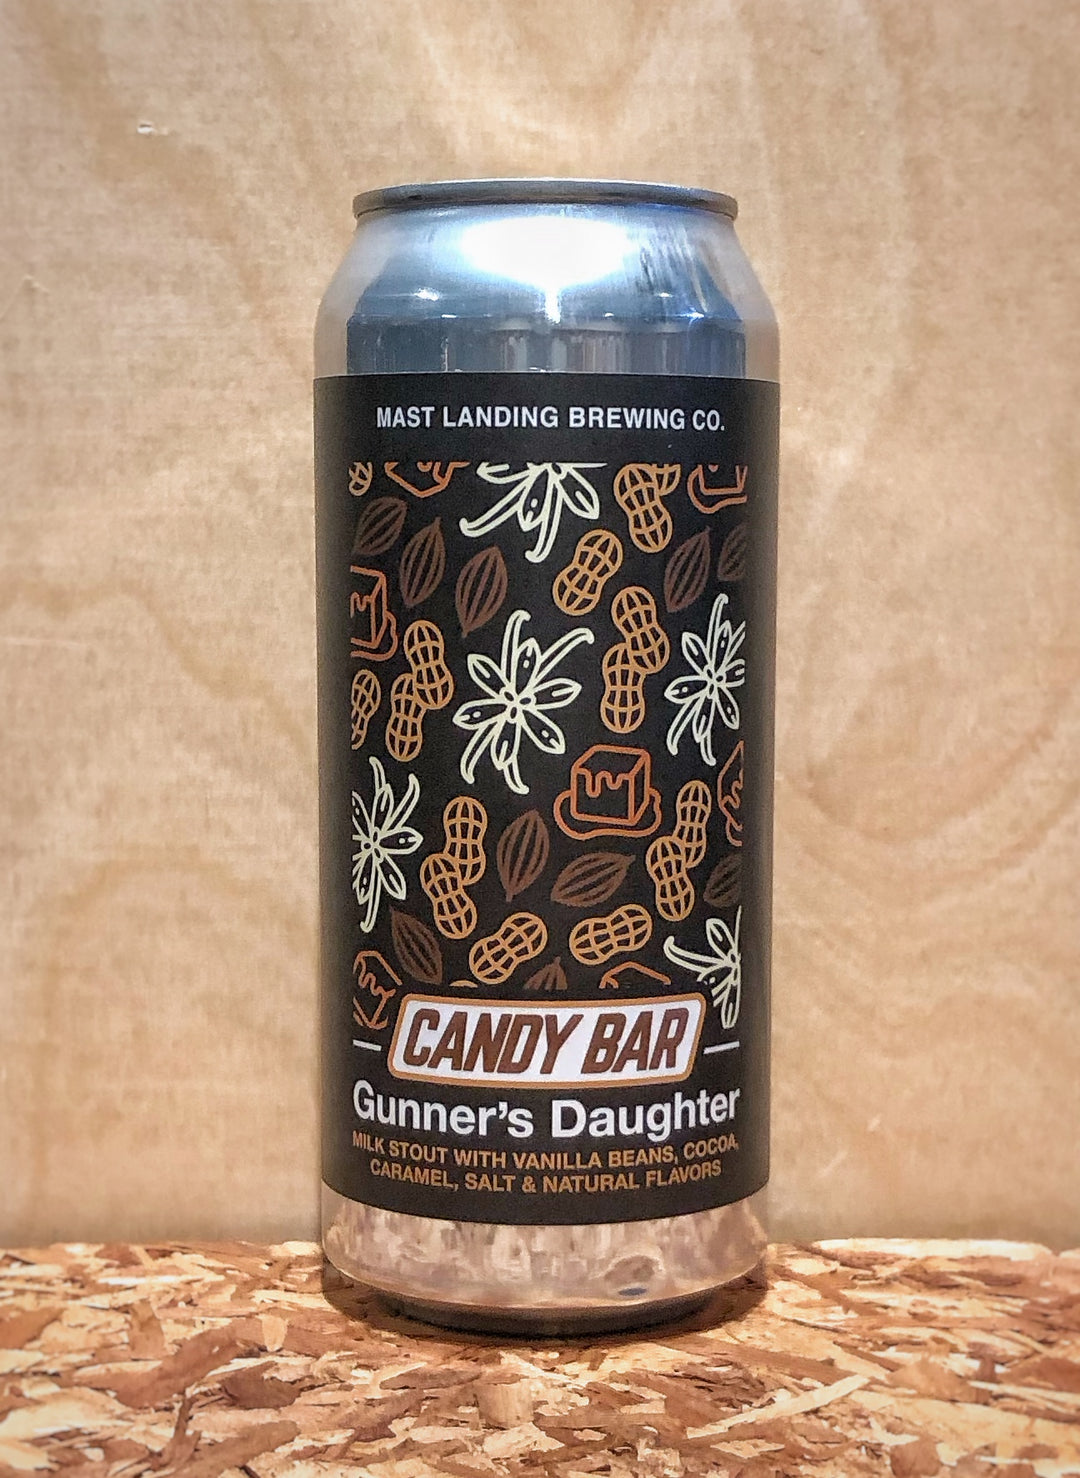 Mast Landing 'Candy Bar Gunner's Daughter' Milk Stout with Vanilla Beans, Cocoa, Caramel, & Salt (Westbrook, ME)